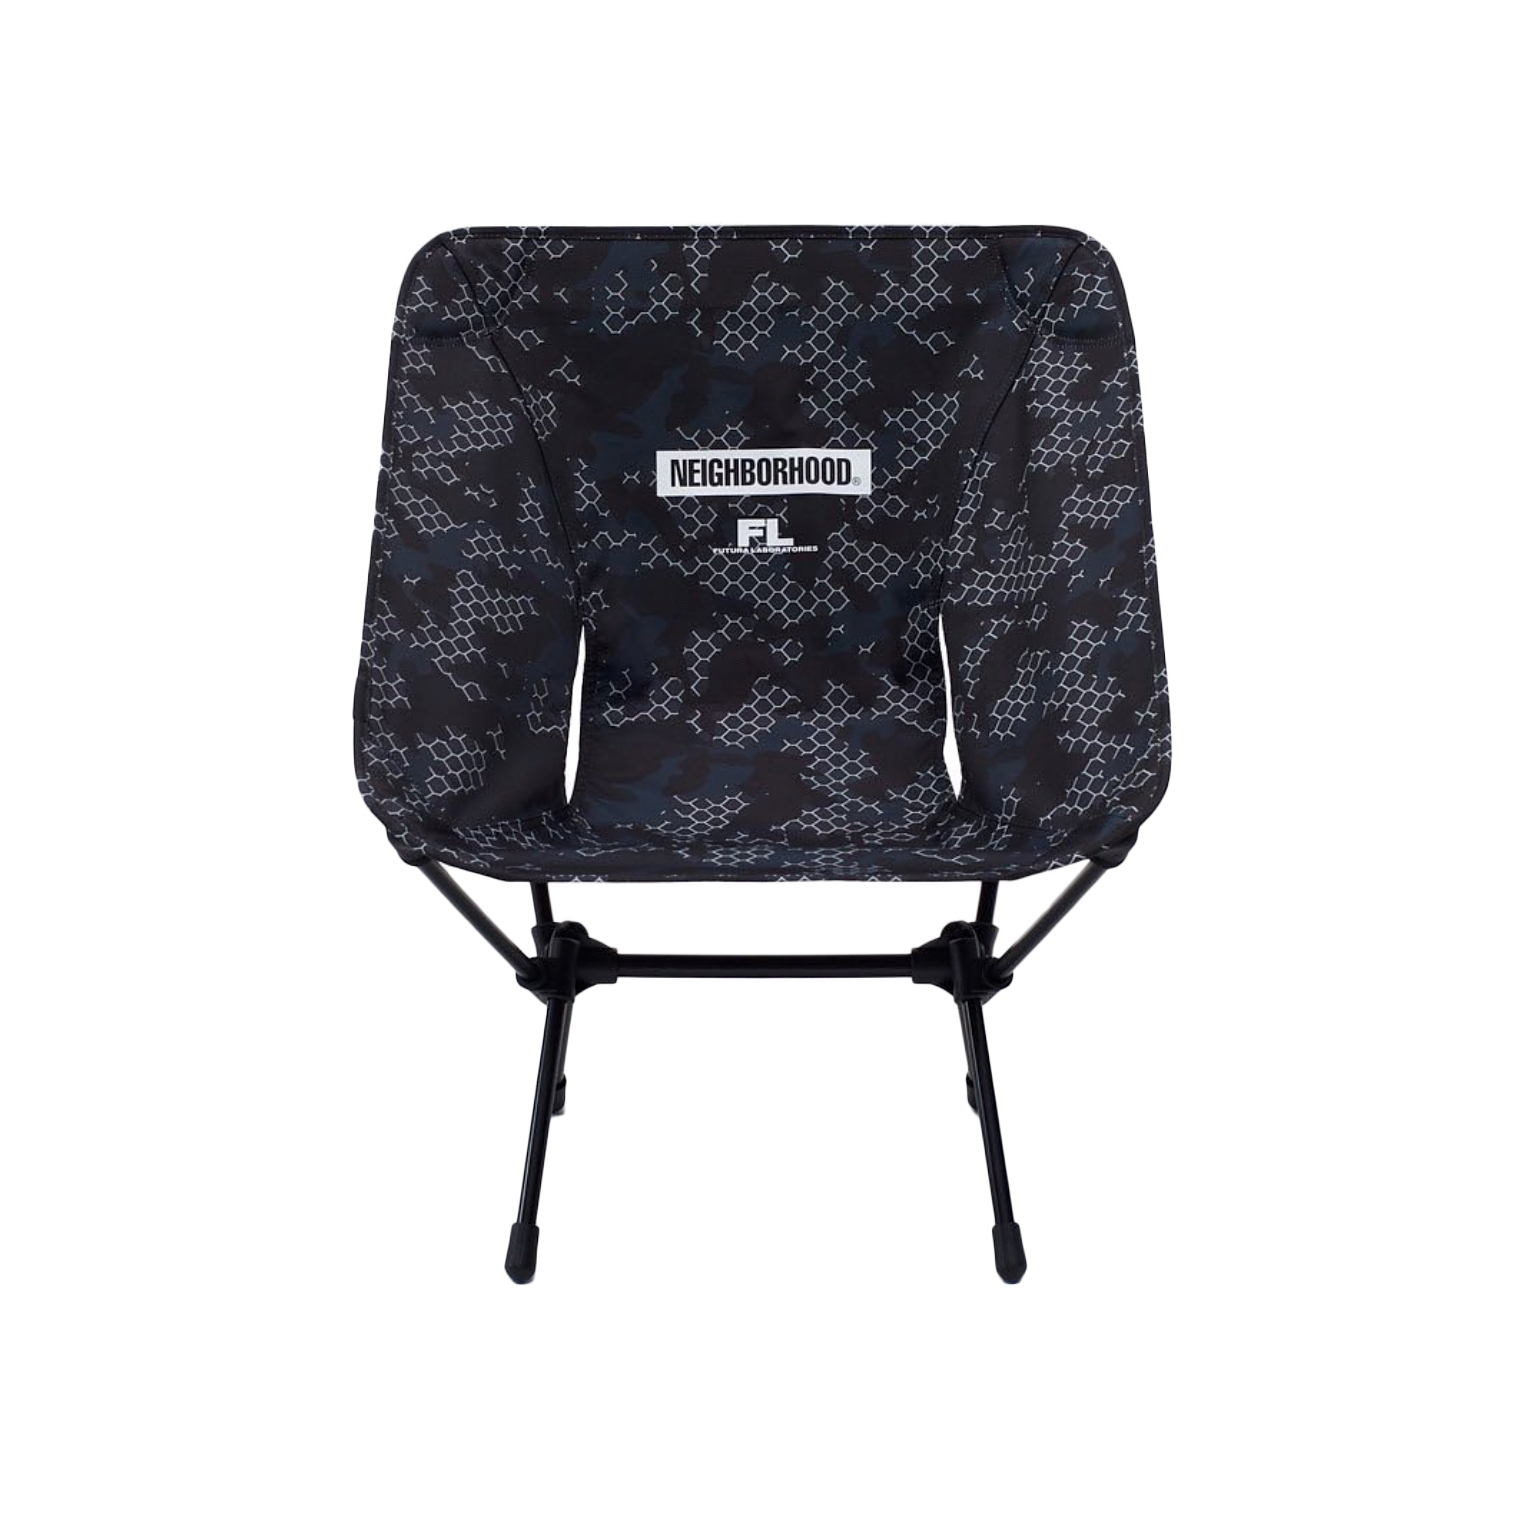 Neighborhood x Futura Laboratories x Helinox Chair One Black Camo 